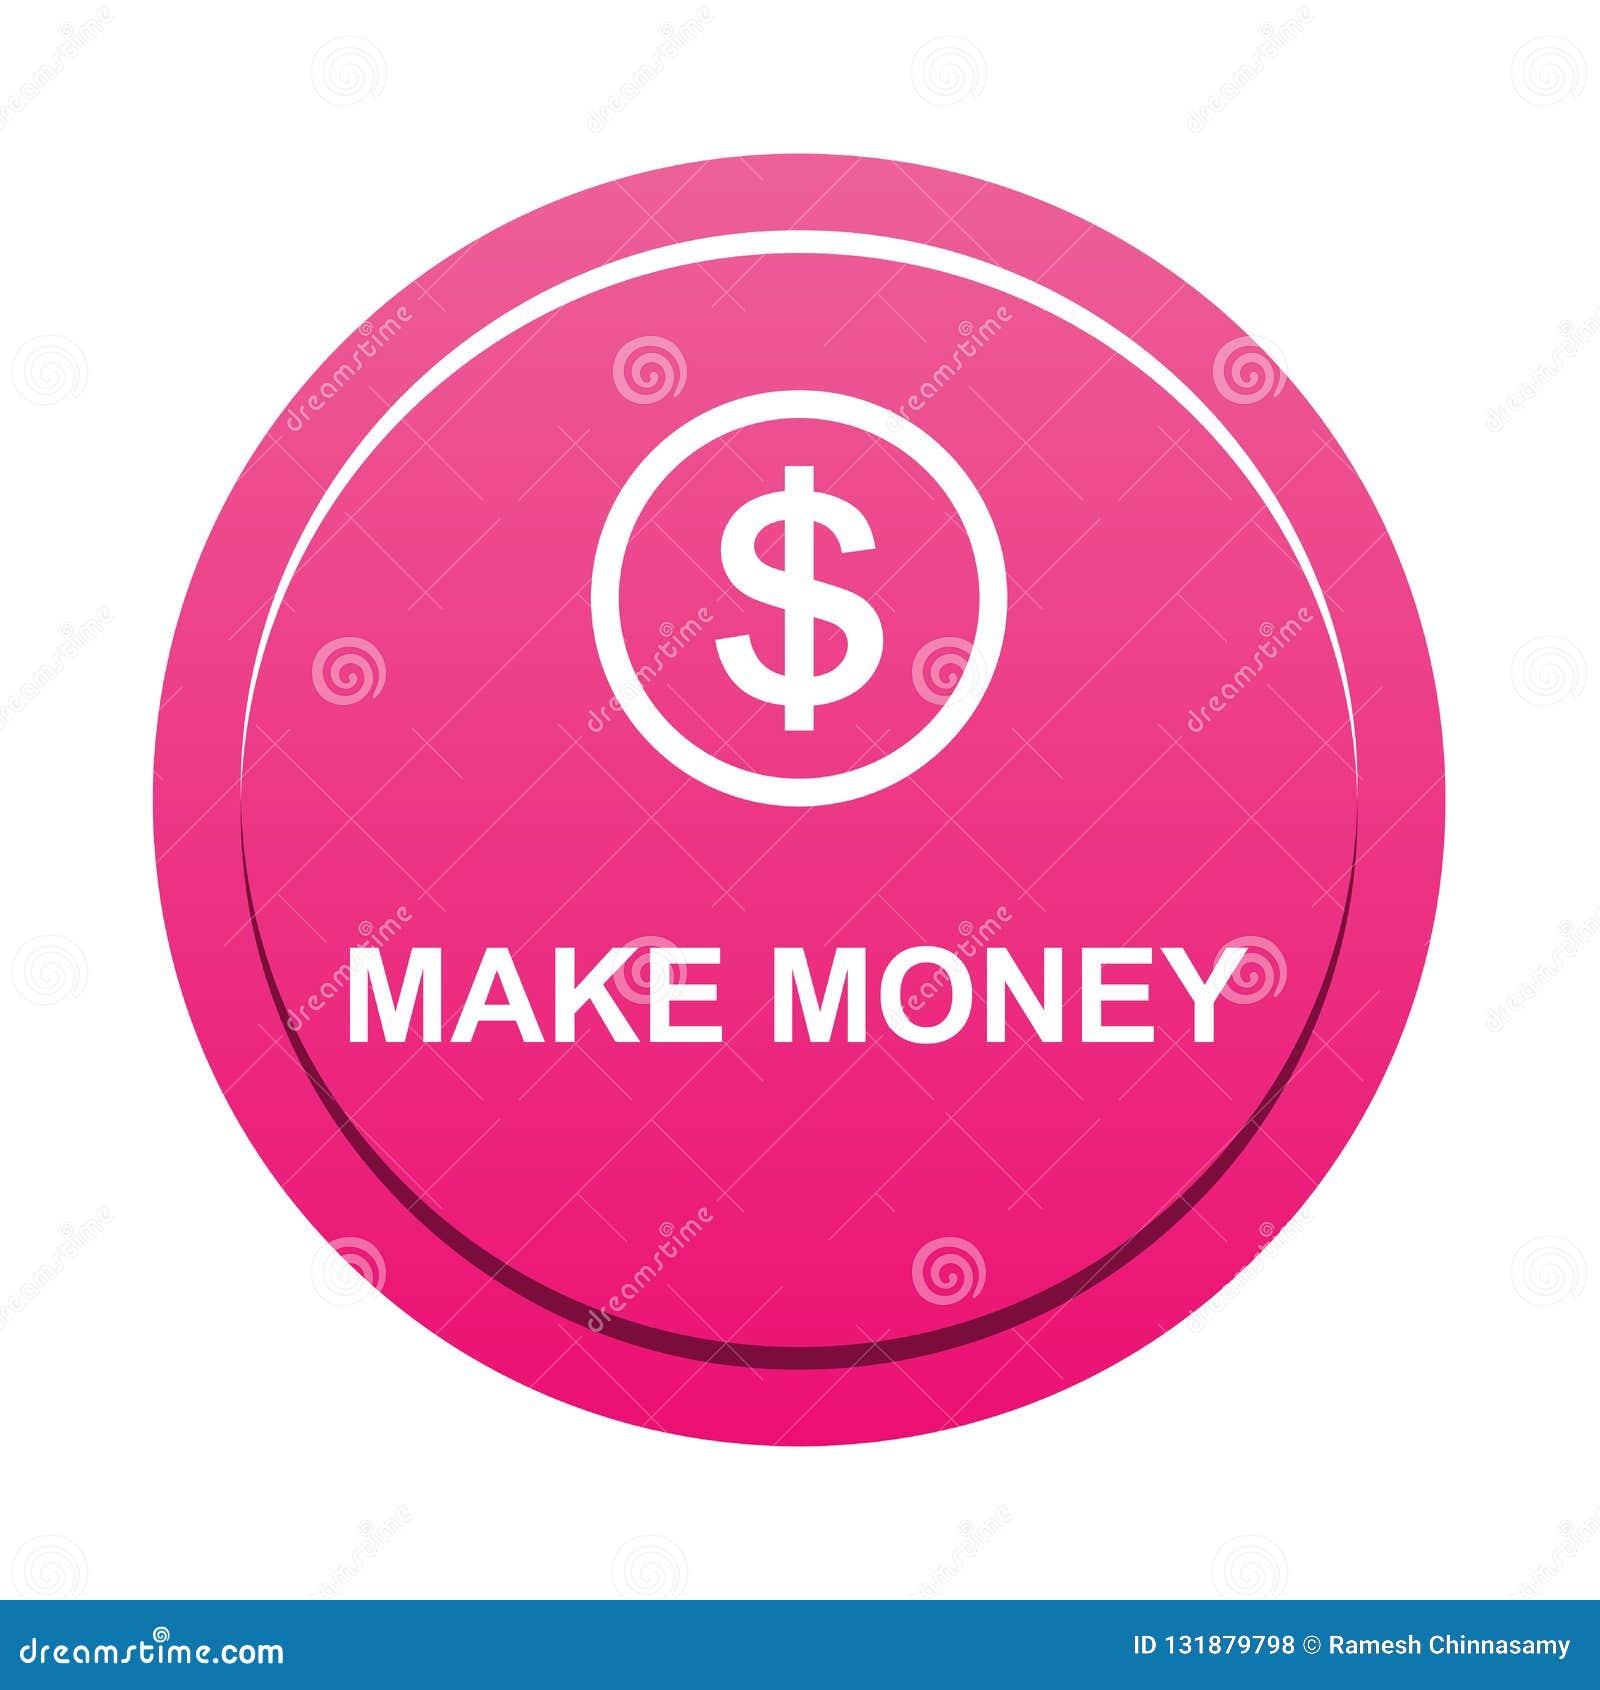 Make Money Button Stock Vector Illustration Of Company